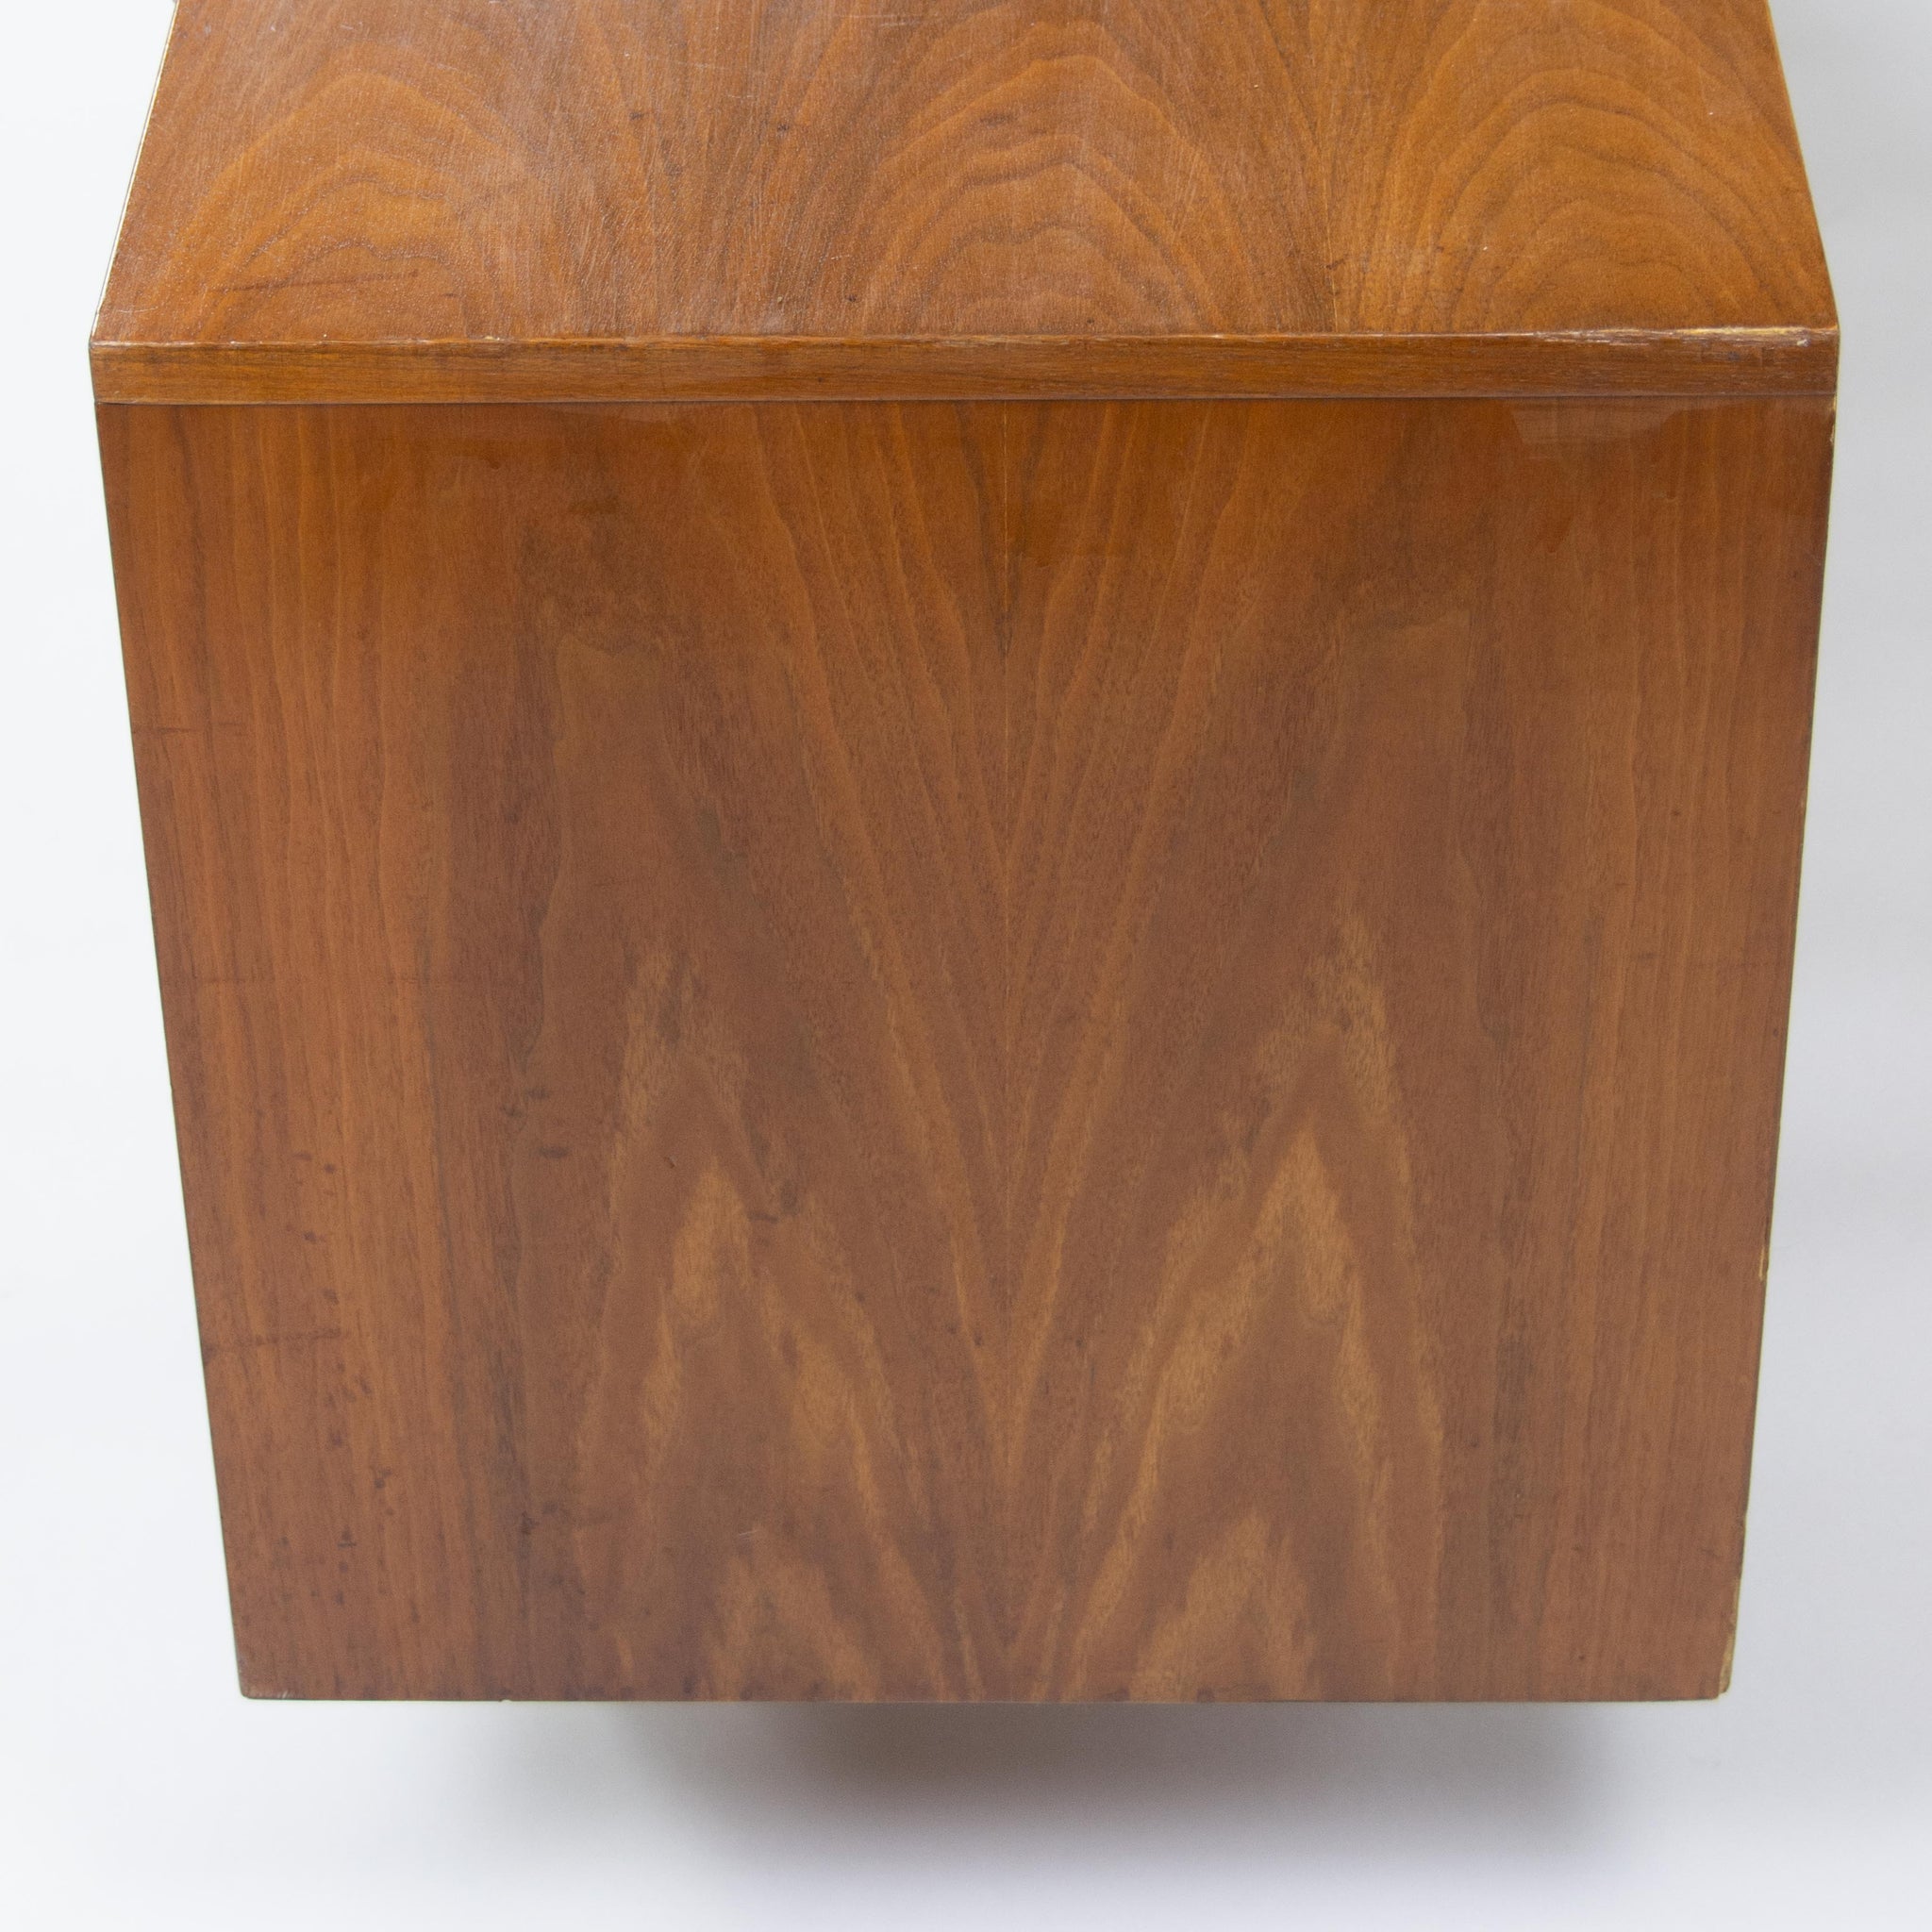 SOLD 1950's George Nelson Herman Miller Rare Walnut Credenza Cabinet Sideboard